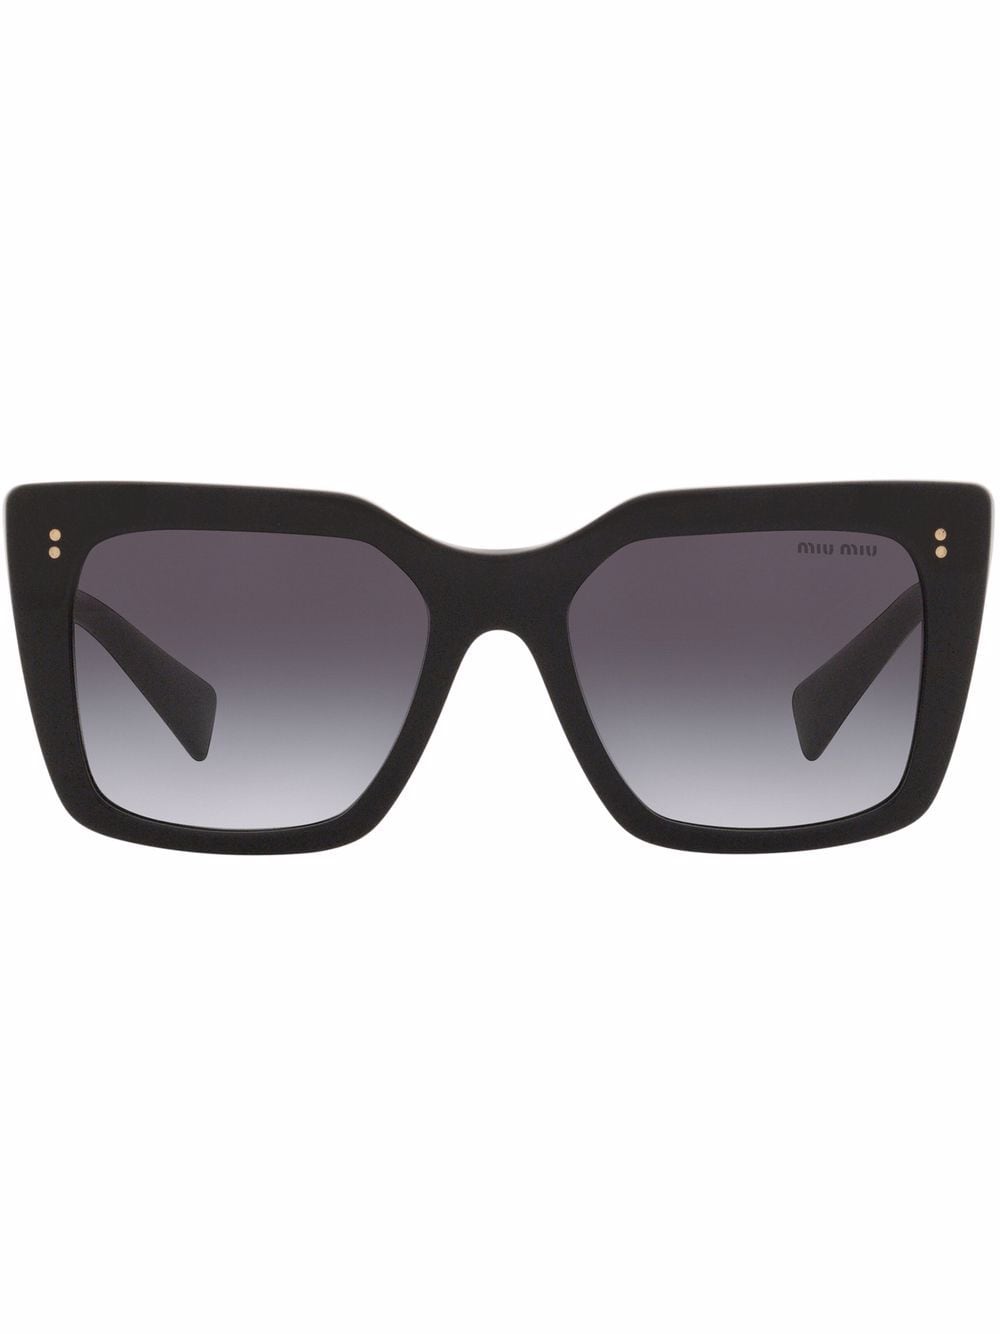 Miu Miu Eyewear square frame sunglasses - Black von Miu Miu Eyewear